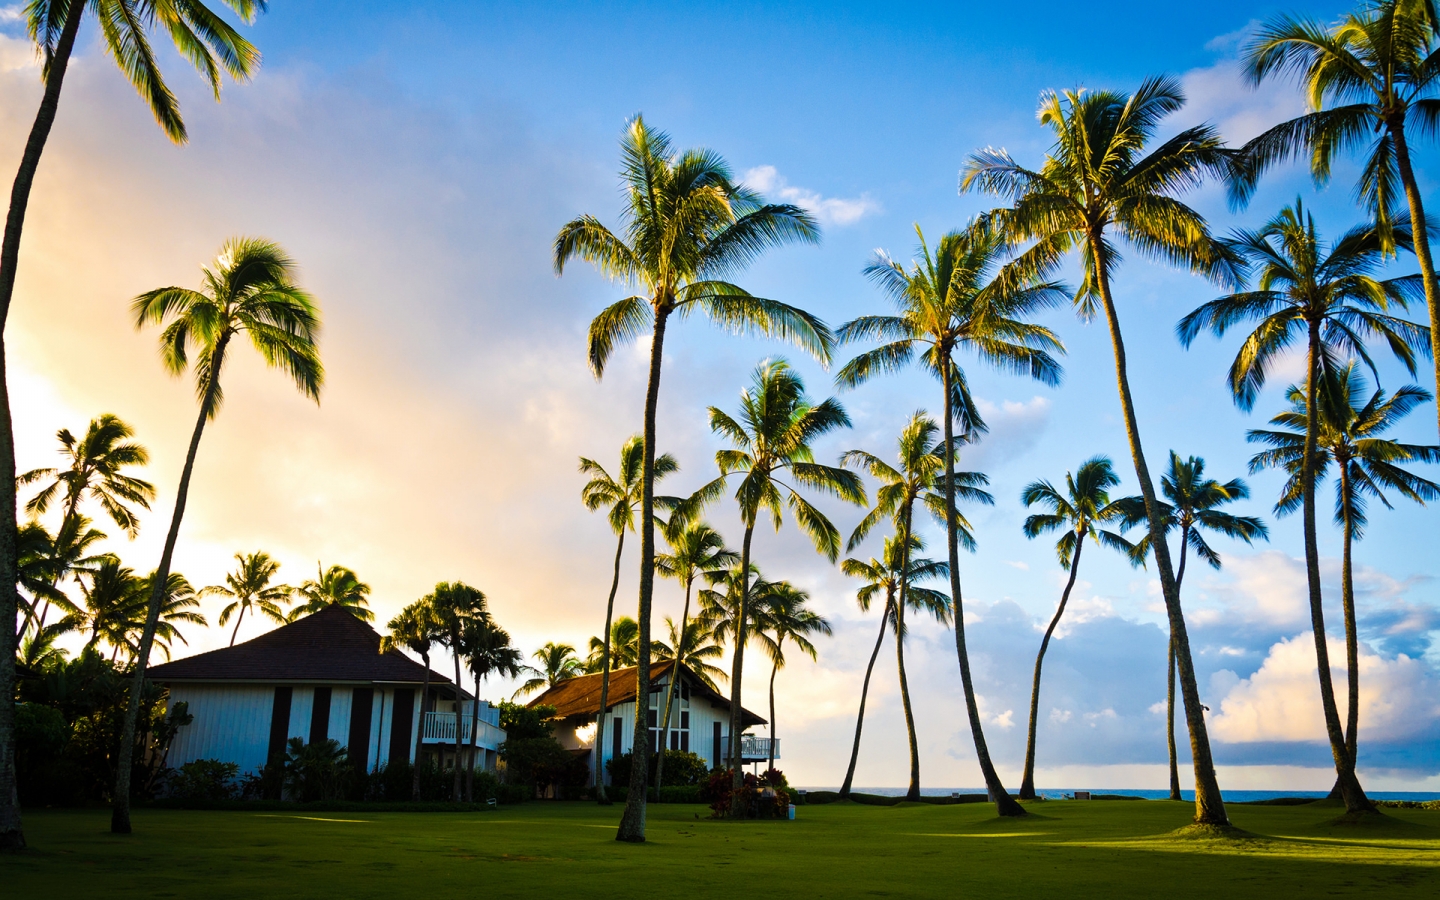 Hawaii Beach Houses for 1440 x 900 widescreen resolution